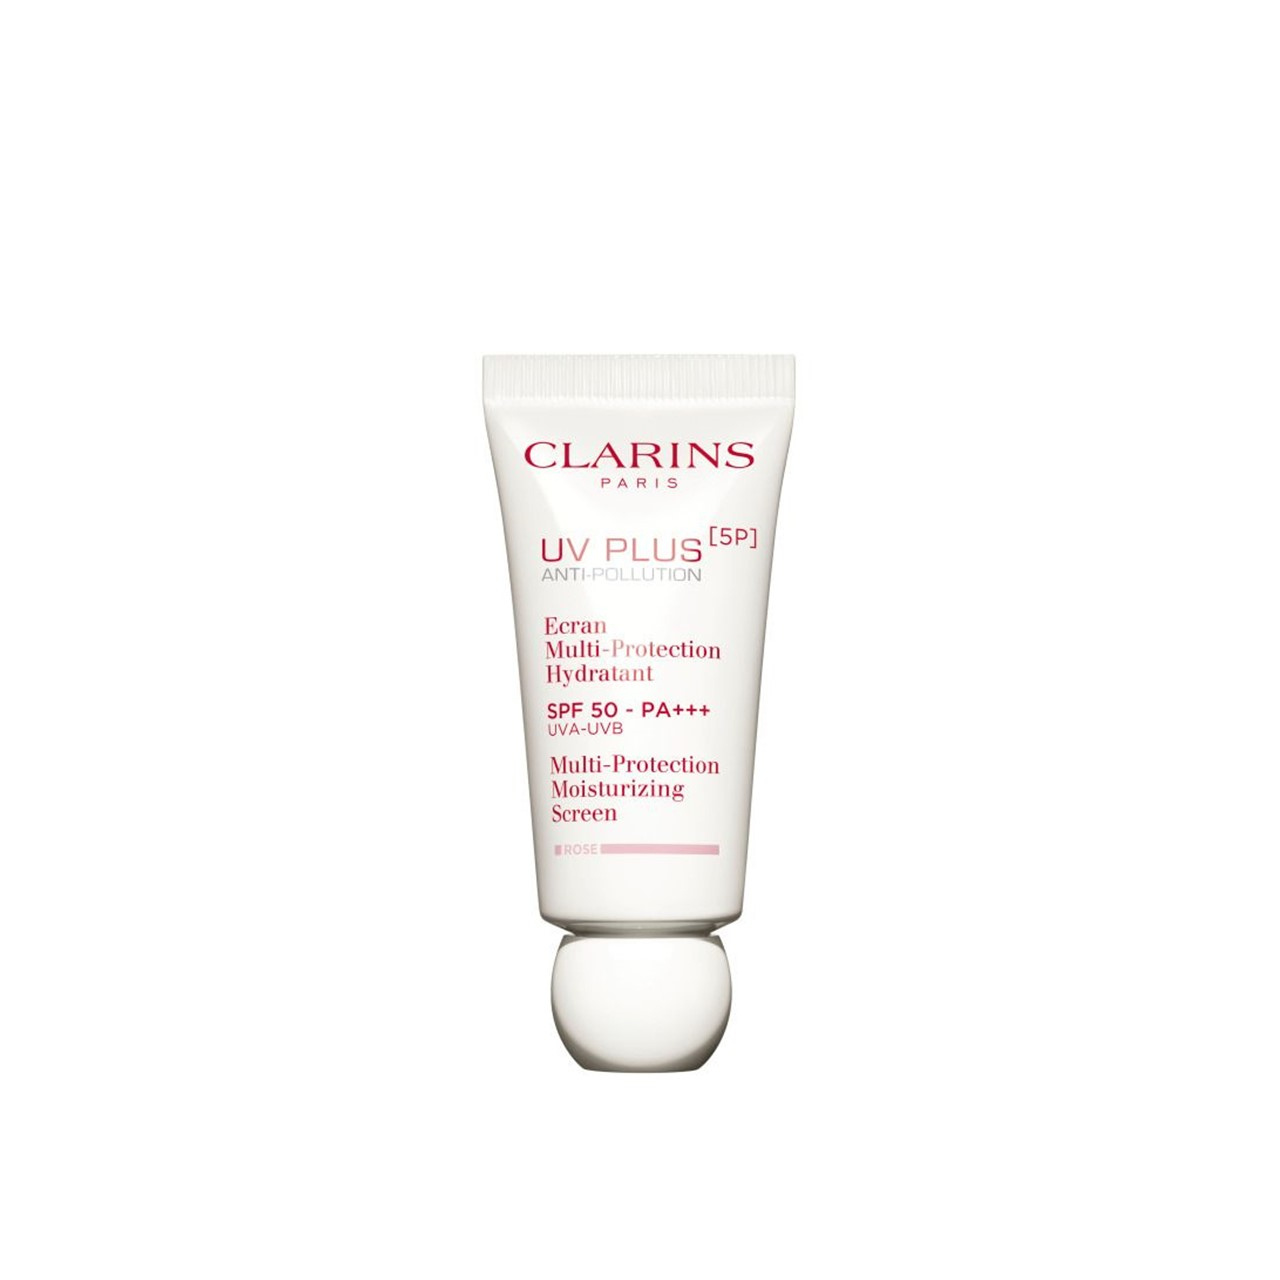 Clarins UV Plus [5P] Anti-Pollution SPF50 Rose 30ml (1.01fl oz)